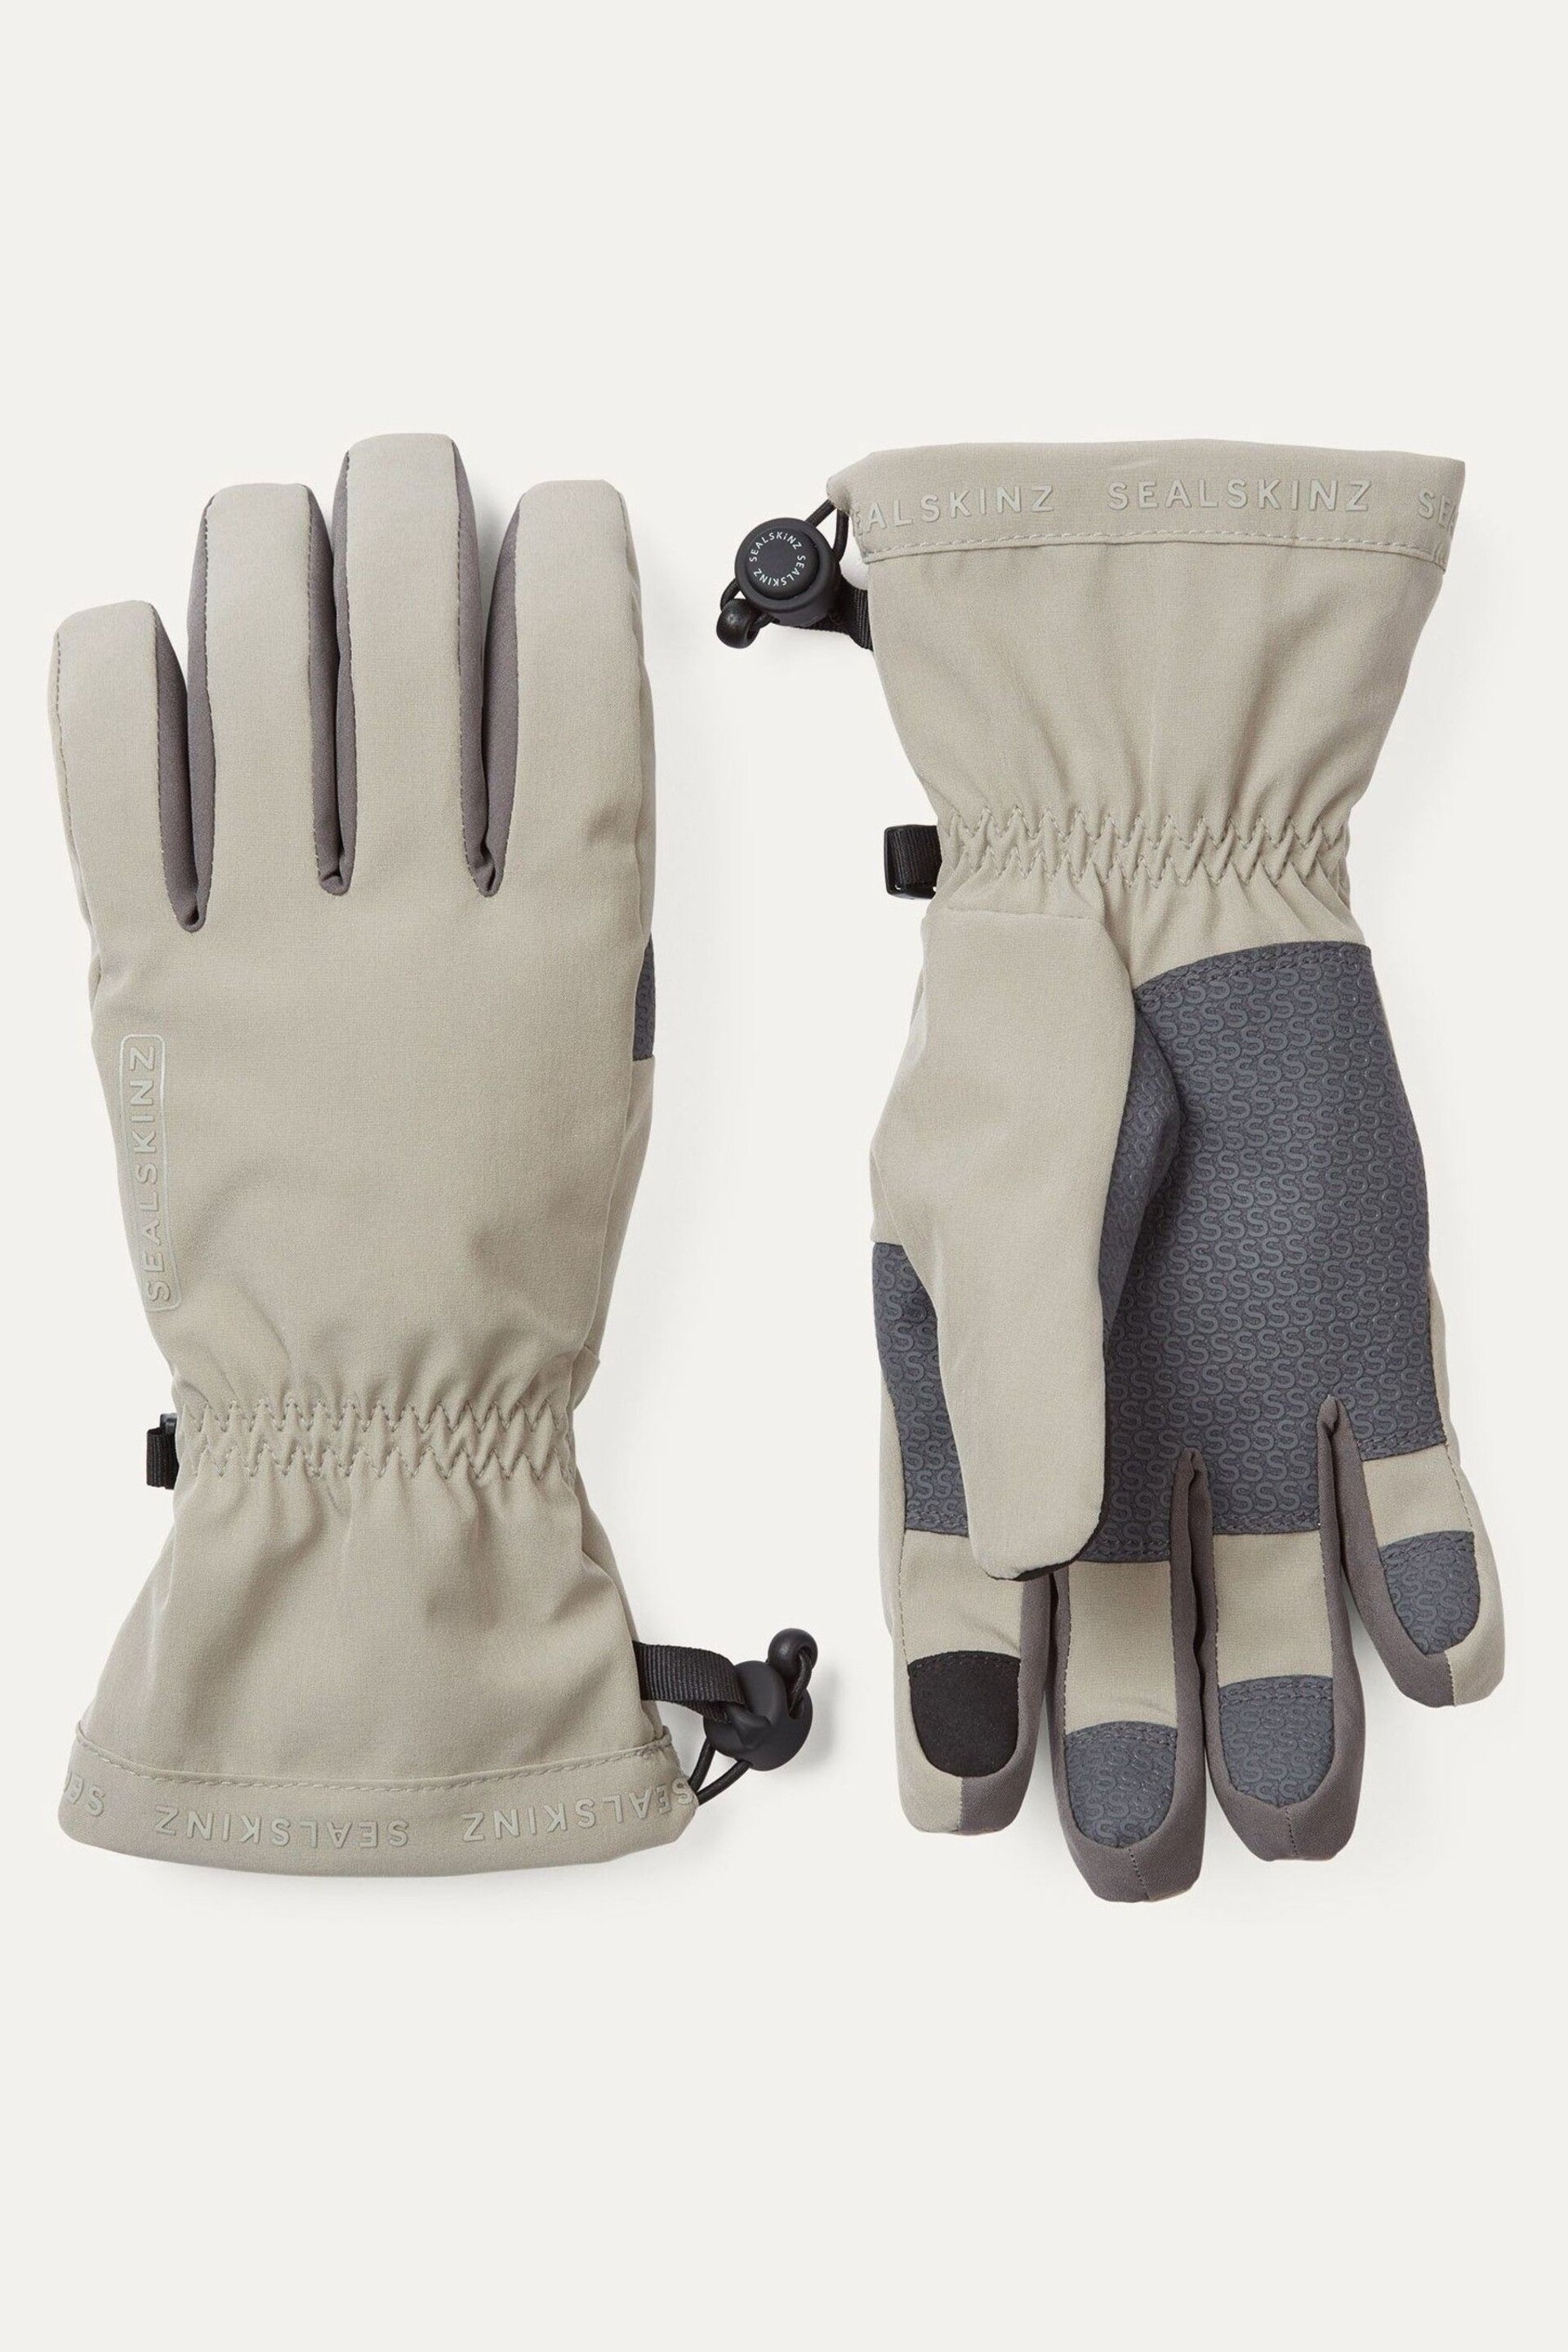 Sealskinz Womens Drayton Waterproof Lightweight Gauntlet Gloves - Image 1 of 3